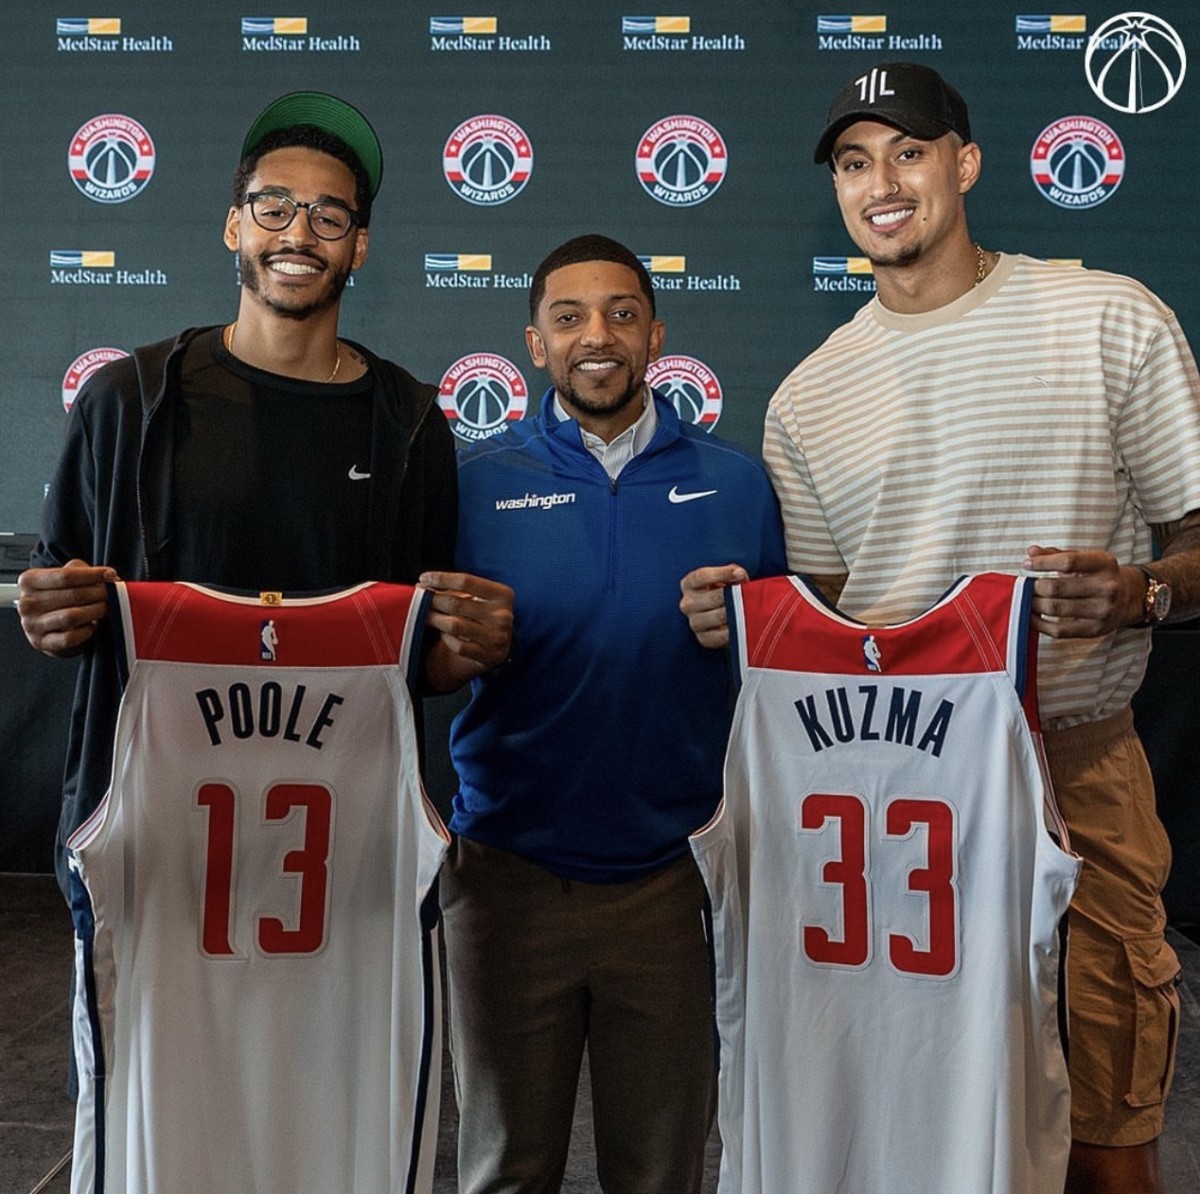 Jordan Poole & Kyle Kuza - The Future of the Washington Wizards